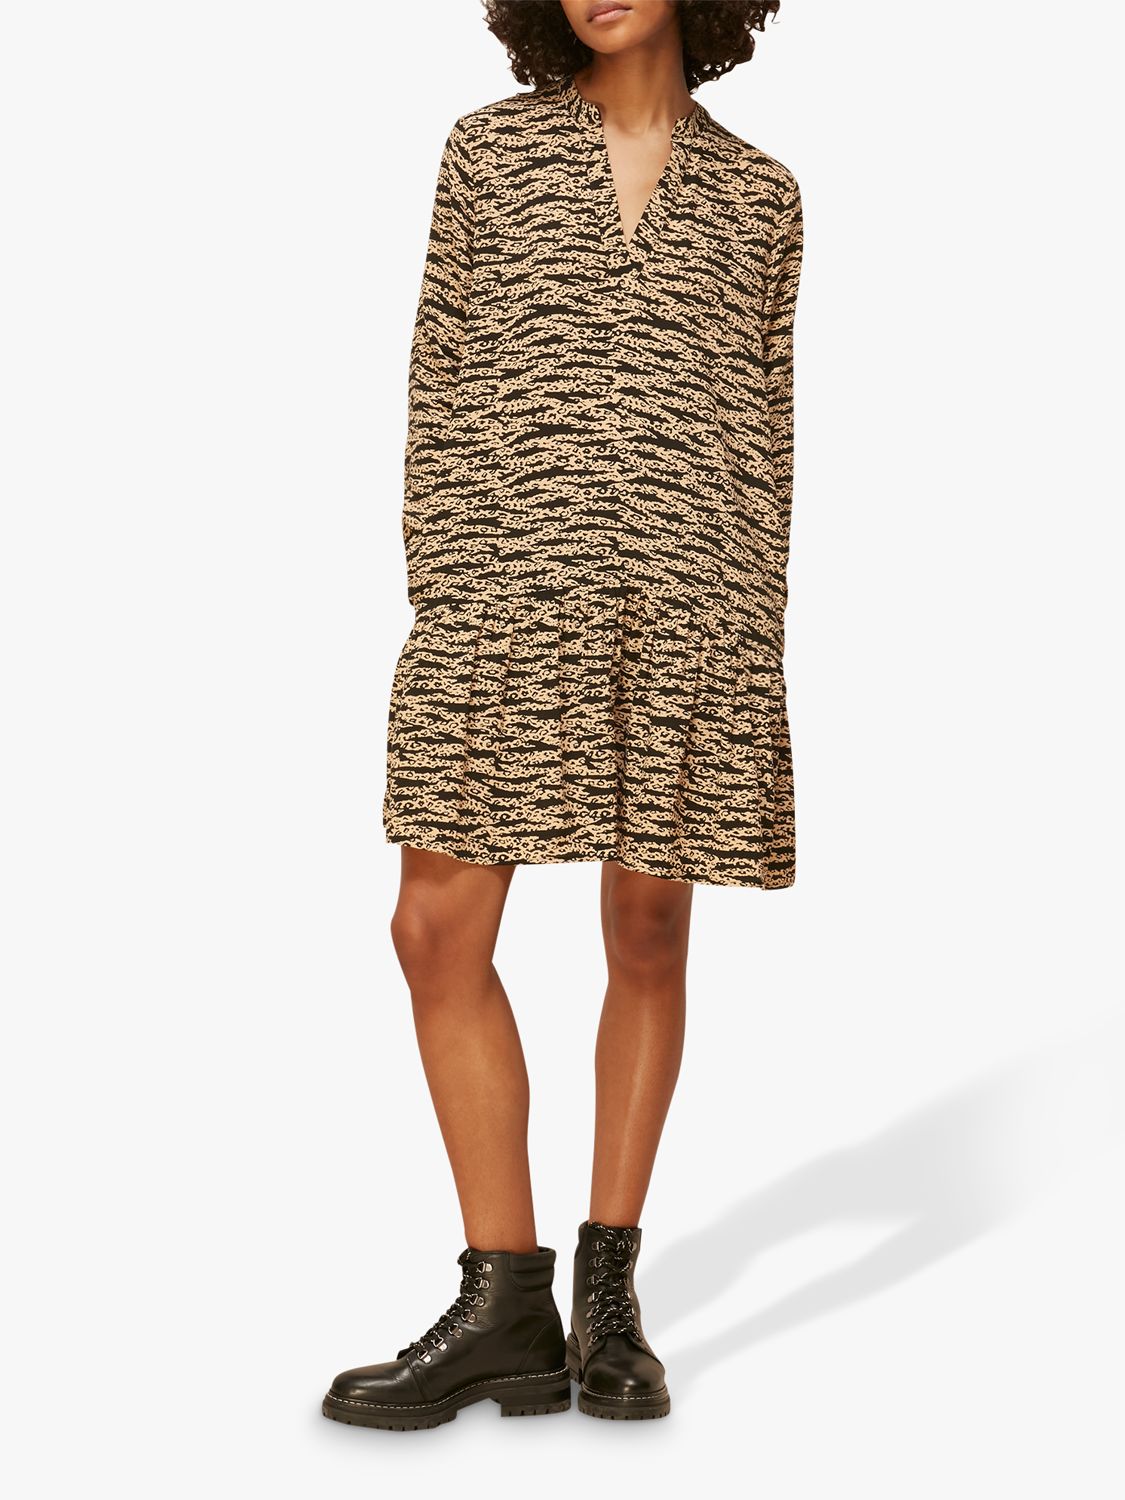 Whistles Tiger Leopard Print Dress, Black/Multi